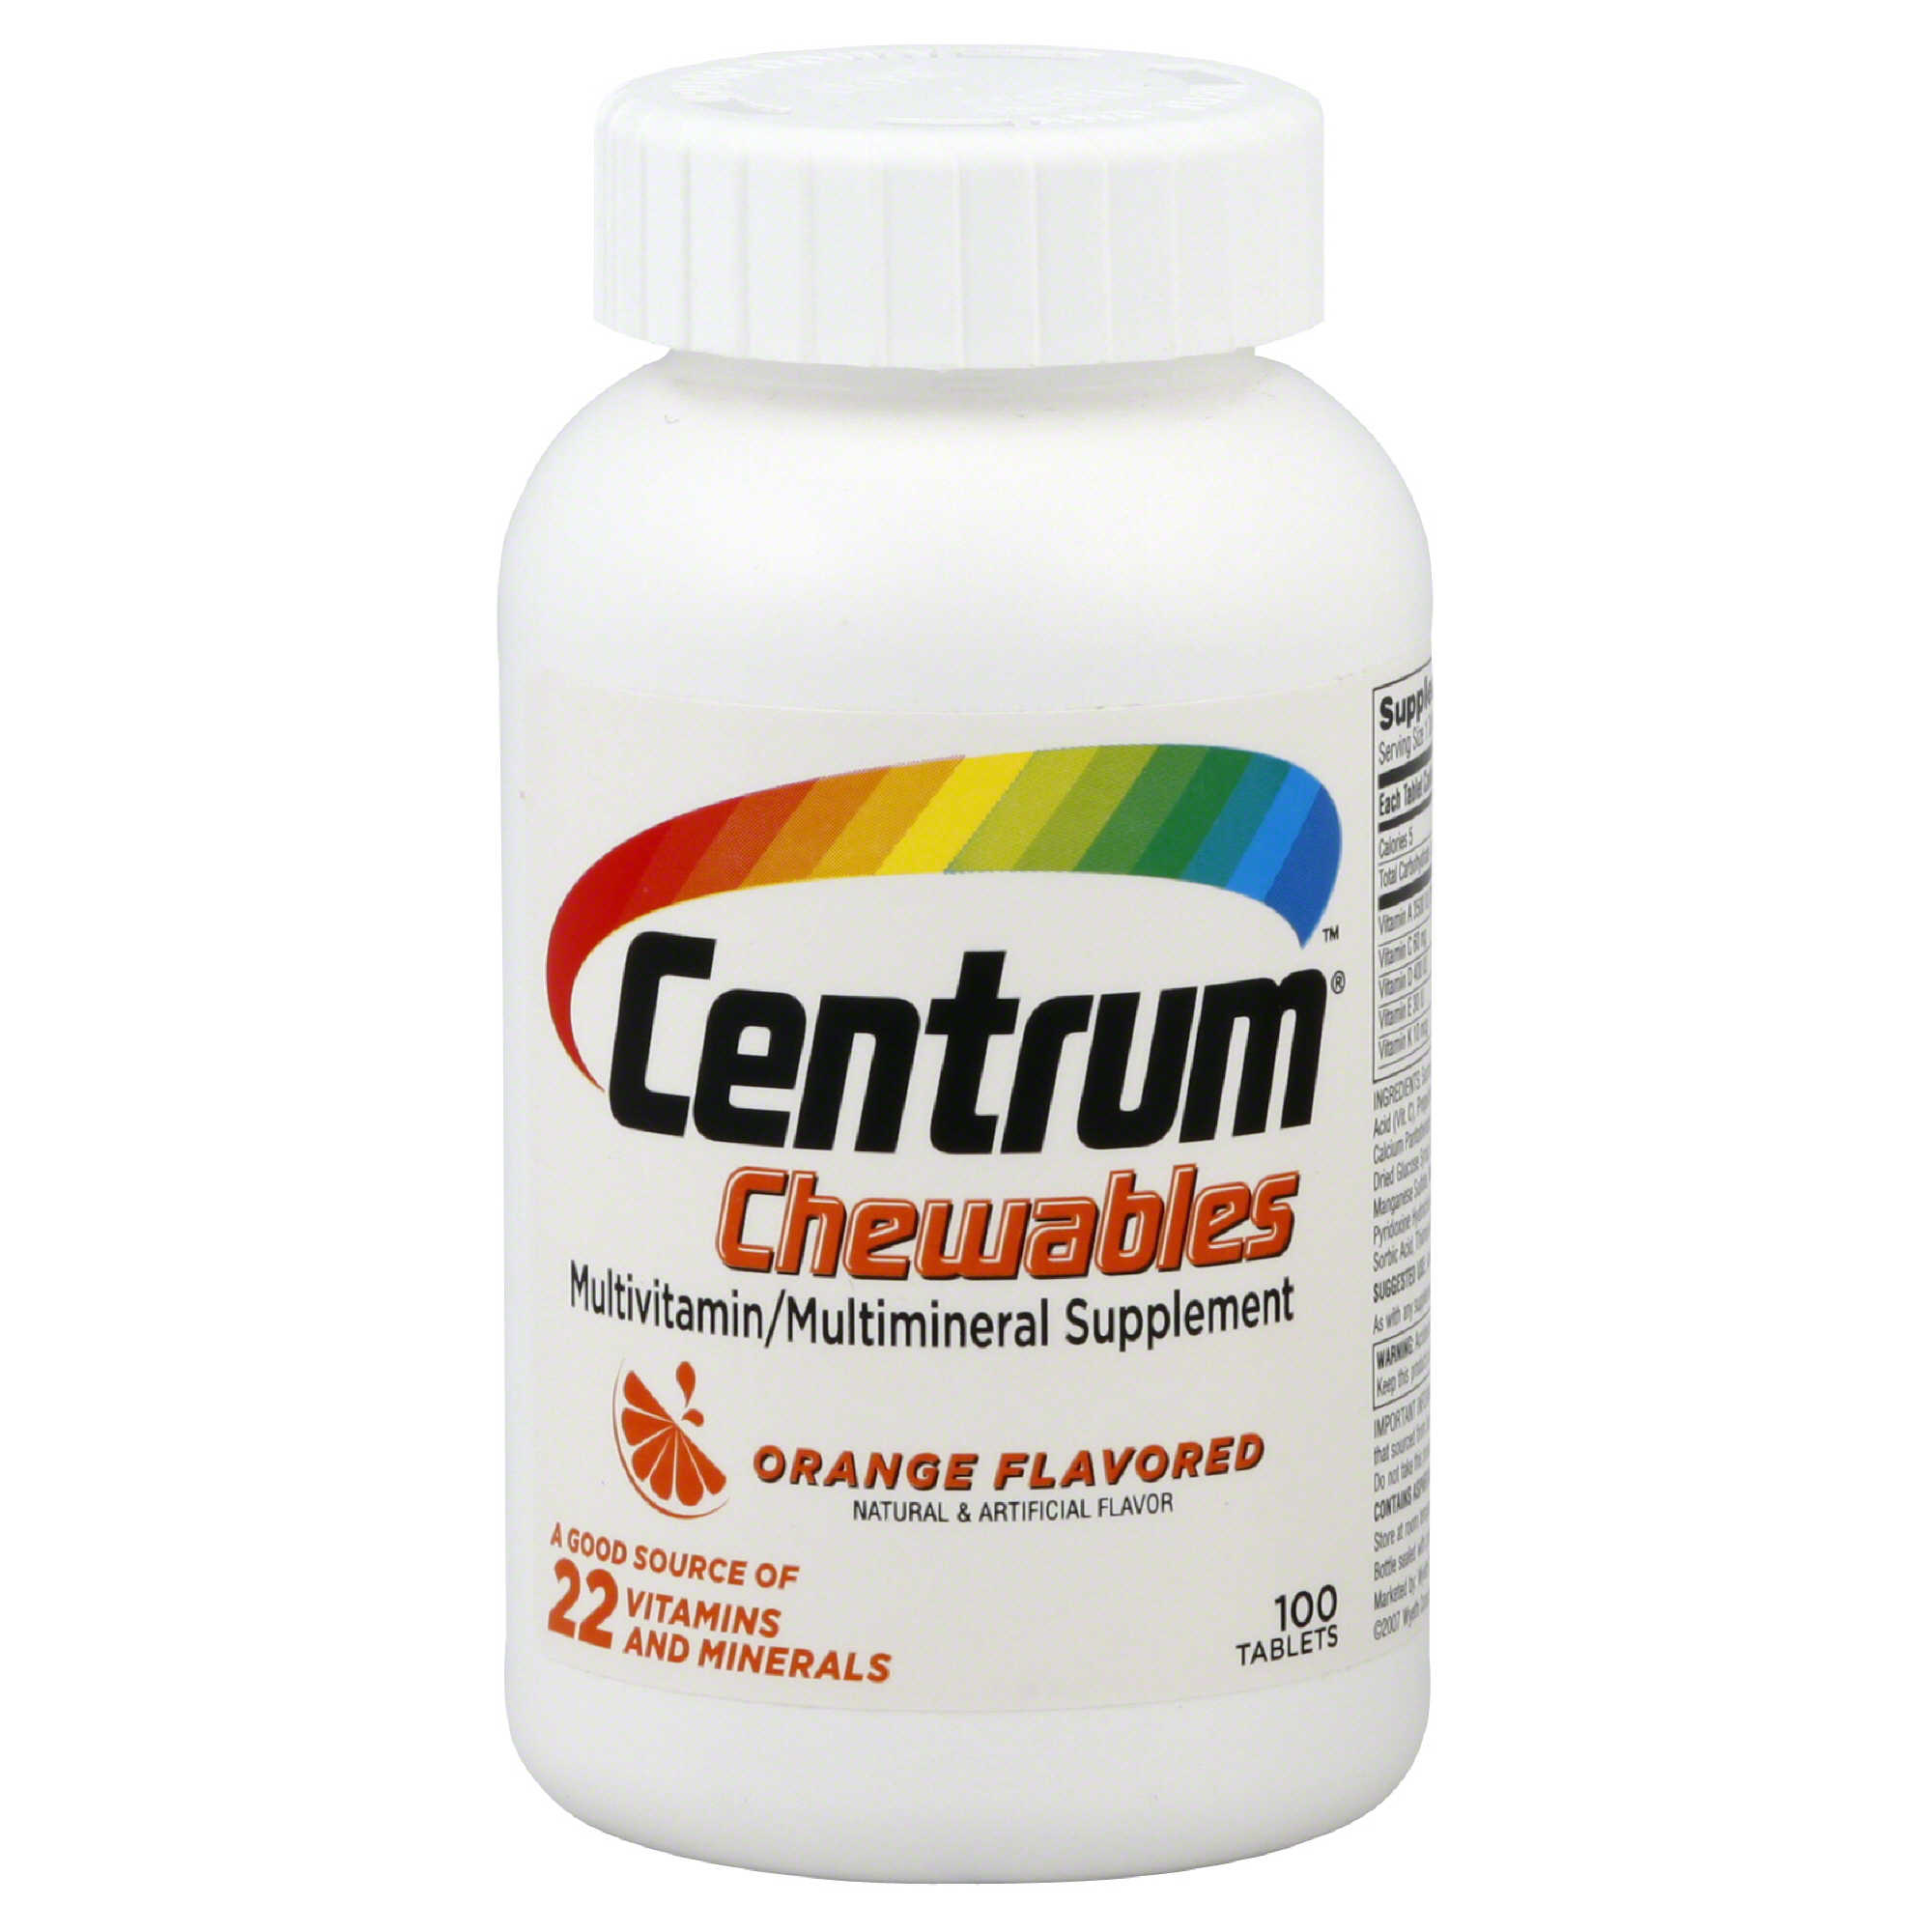 Centrum® Chewables 100-Count Multivitamin/Multimineral Supplement Tablets in Orange